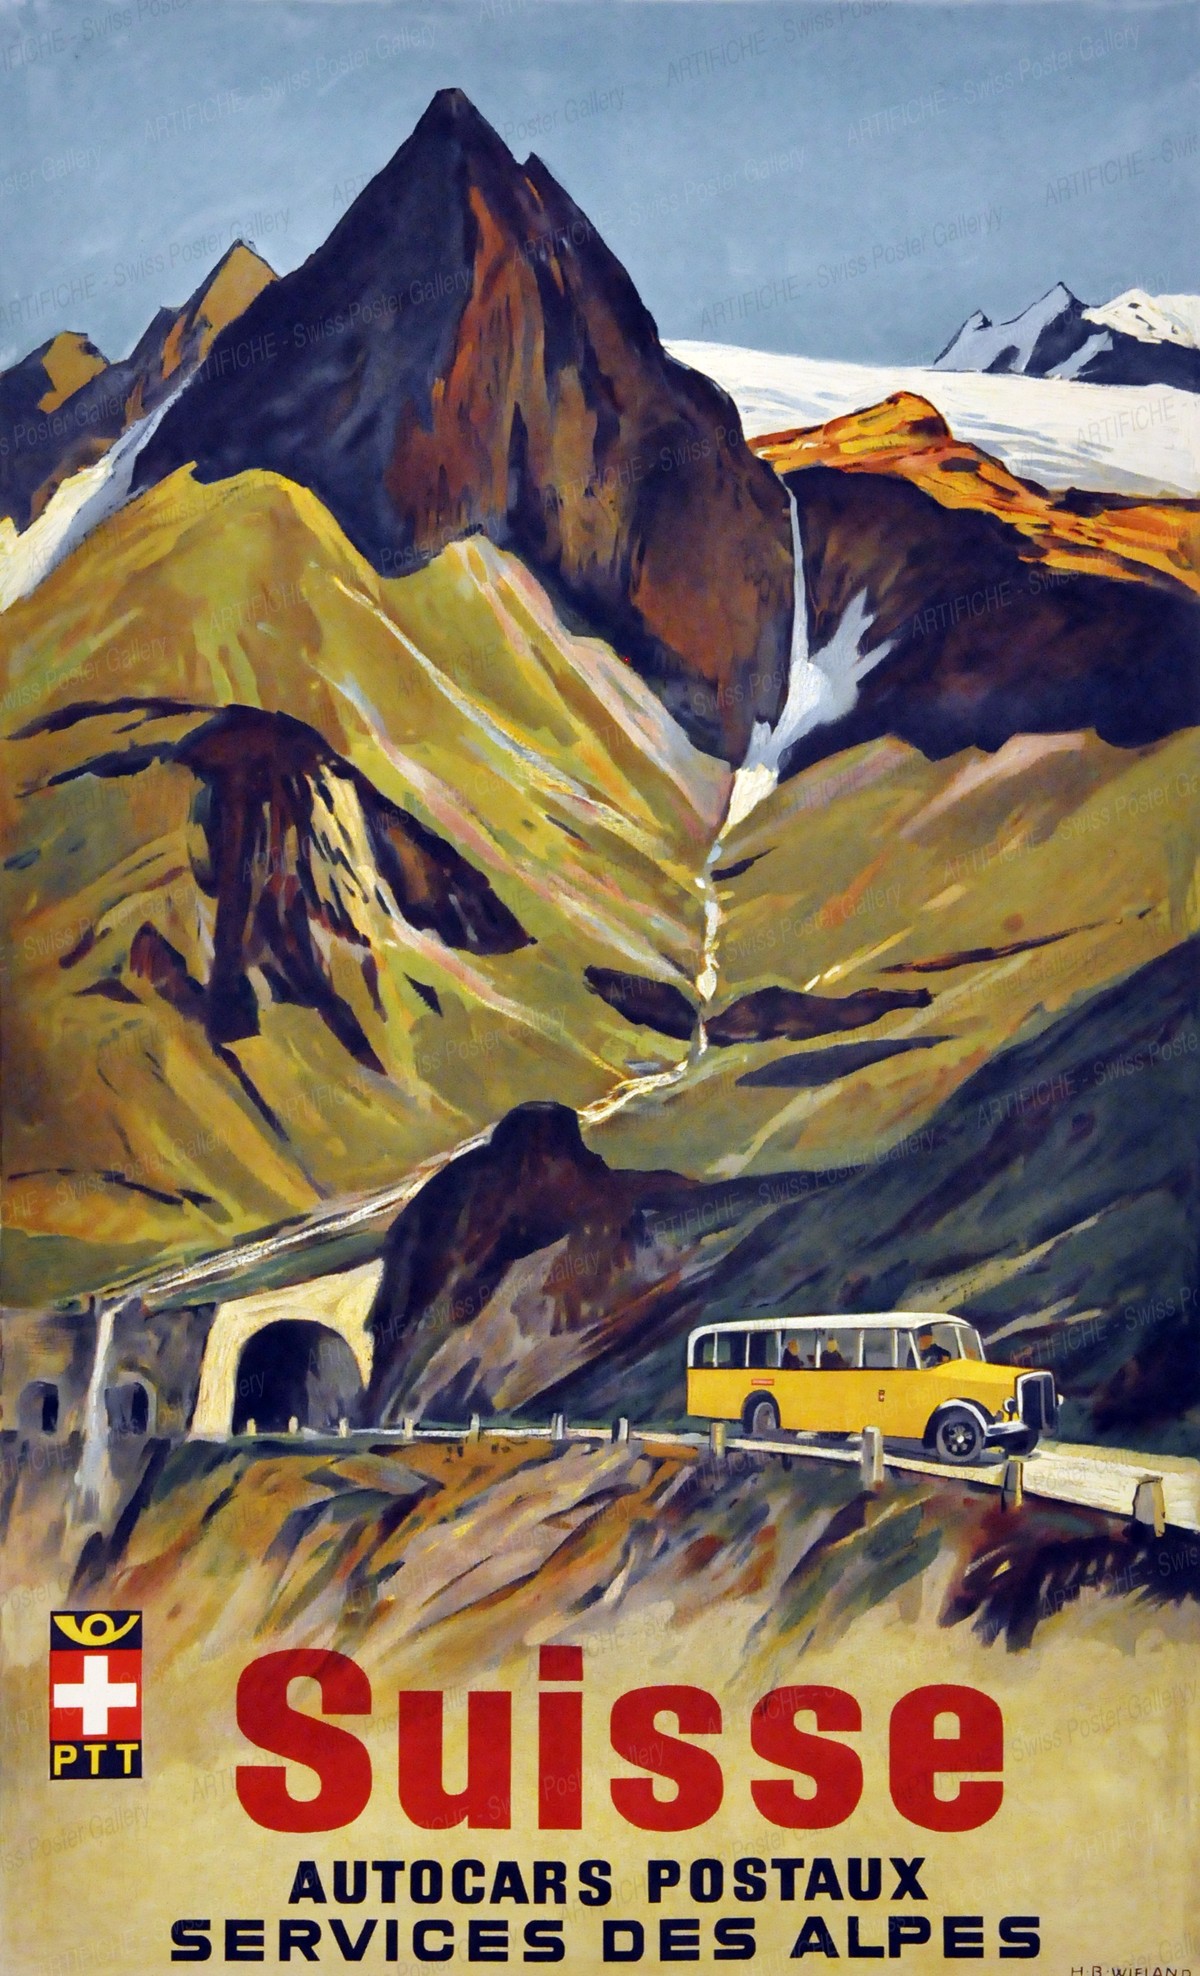 Switzerland – Postbus over the Alps, Hans Beat Wieland